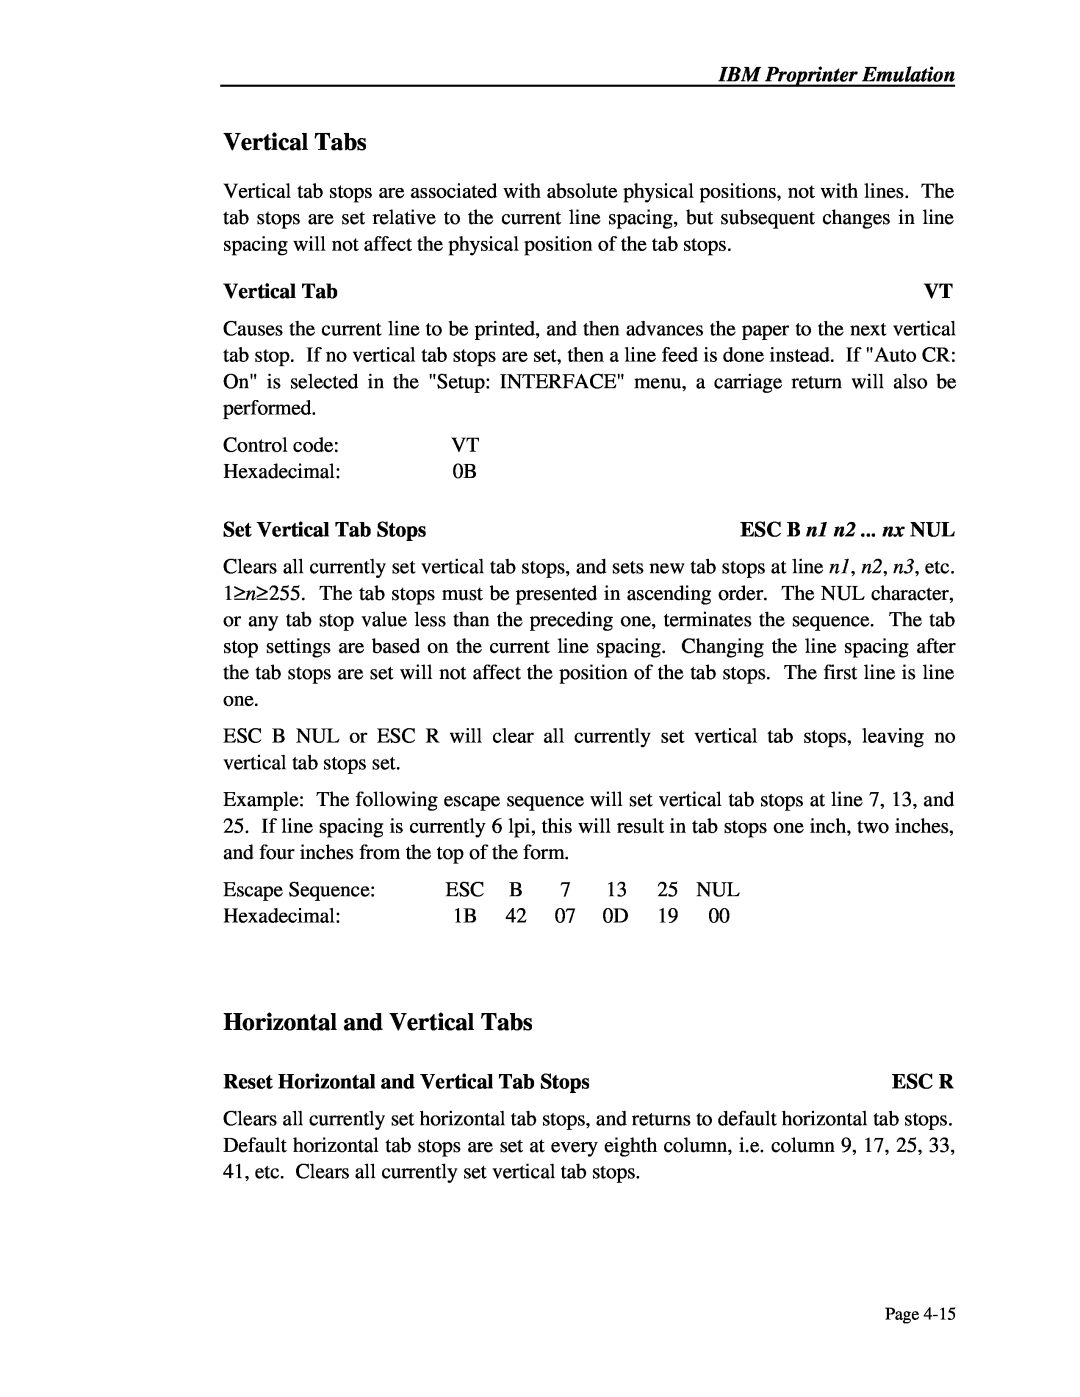 Printek 4503, 4300 Horizontal and Vertical Tabs, Set Vertical Tab Stops, Reset Horizontal and Vertical Tab Stops, Esc R 